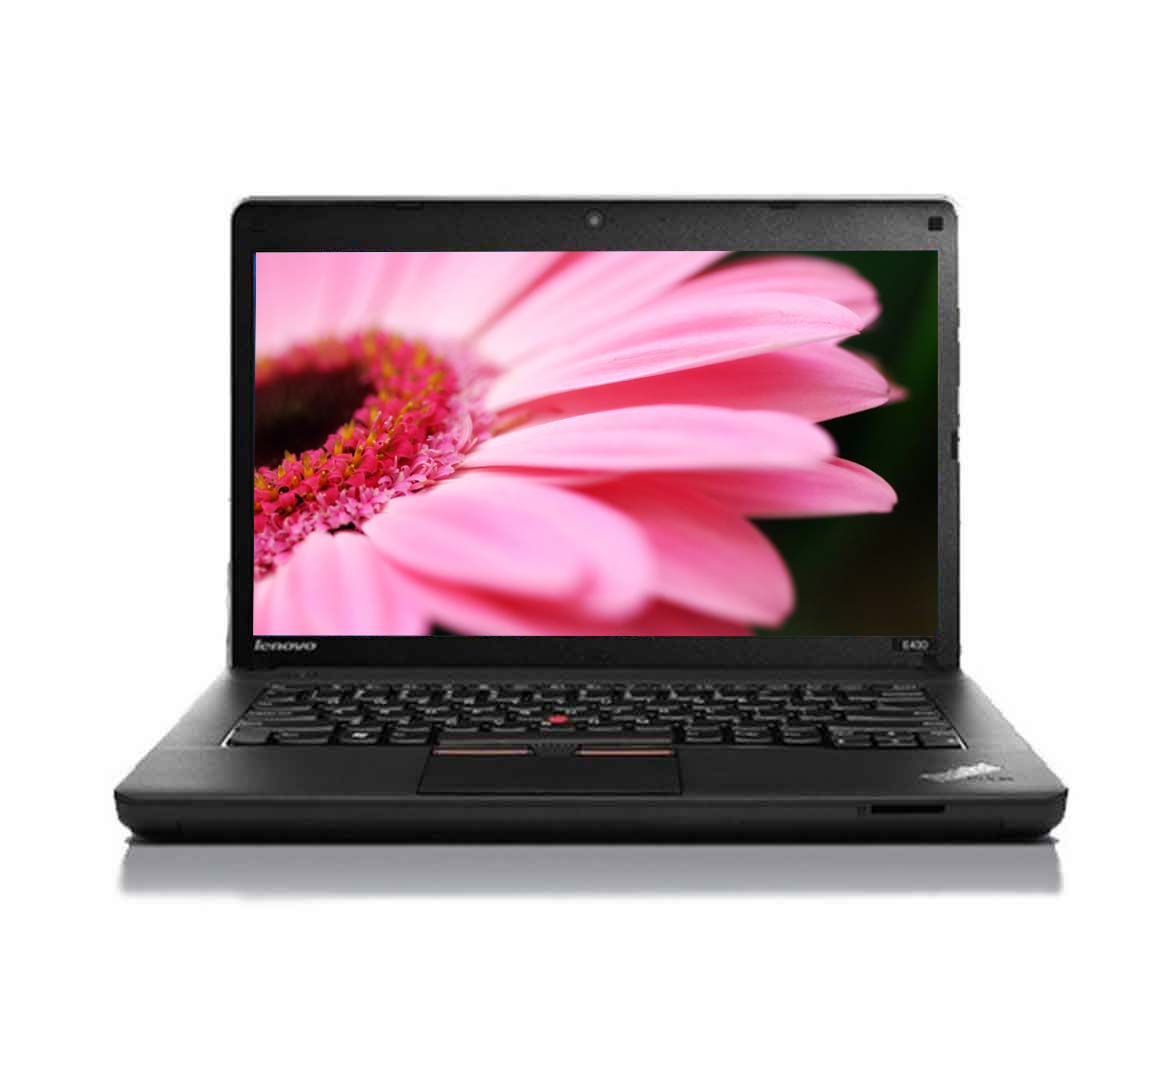 Lenovo ThinkPad E430 Business Laptop, Intel Core i3-2nd Generation CPU, 4GB RAM, 500GB HDD, 14 inch Display, Windows 10 Pro, Refurbished Laptop